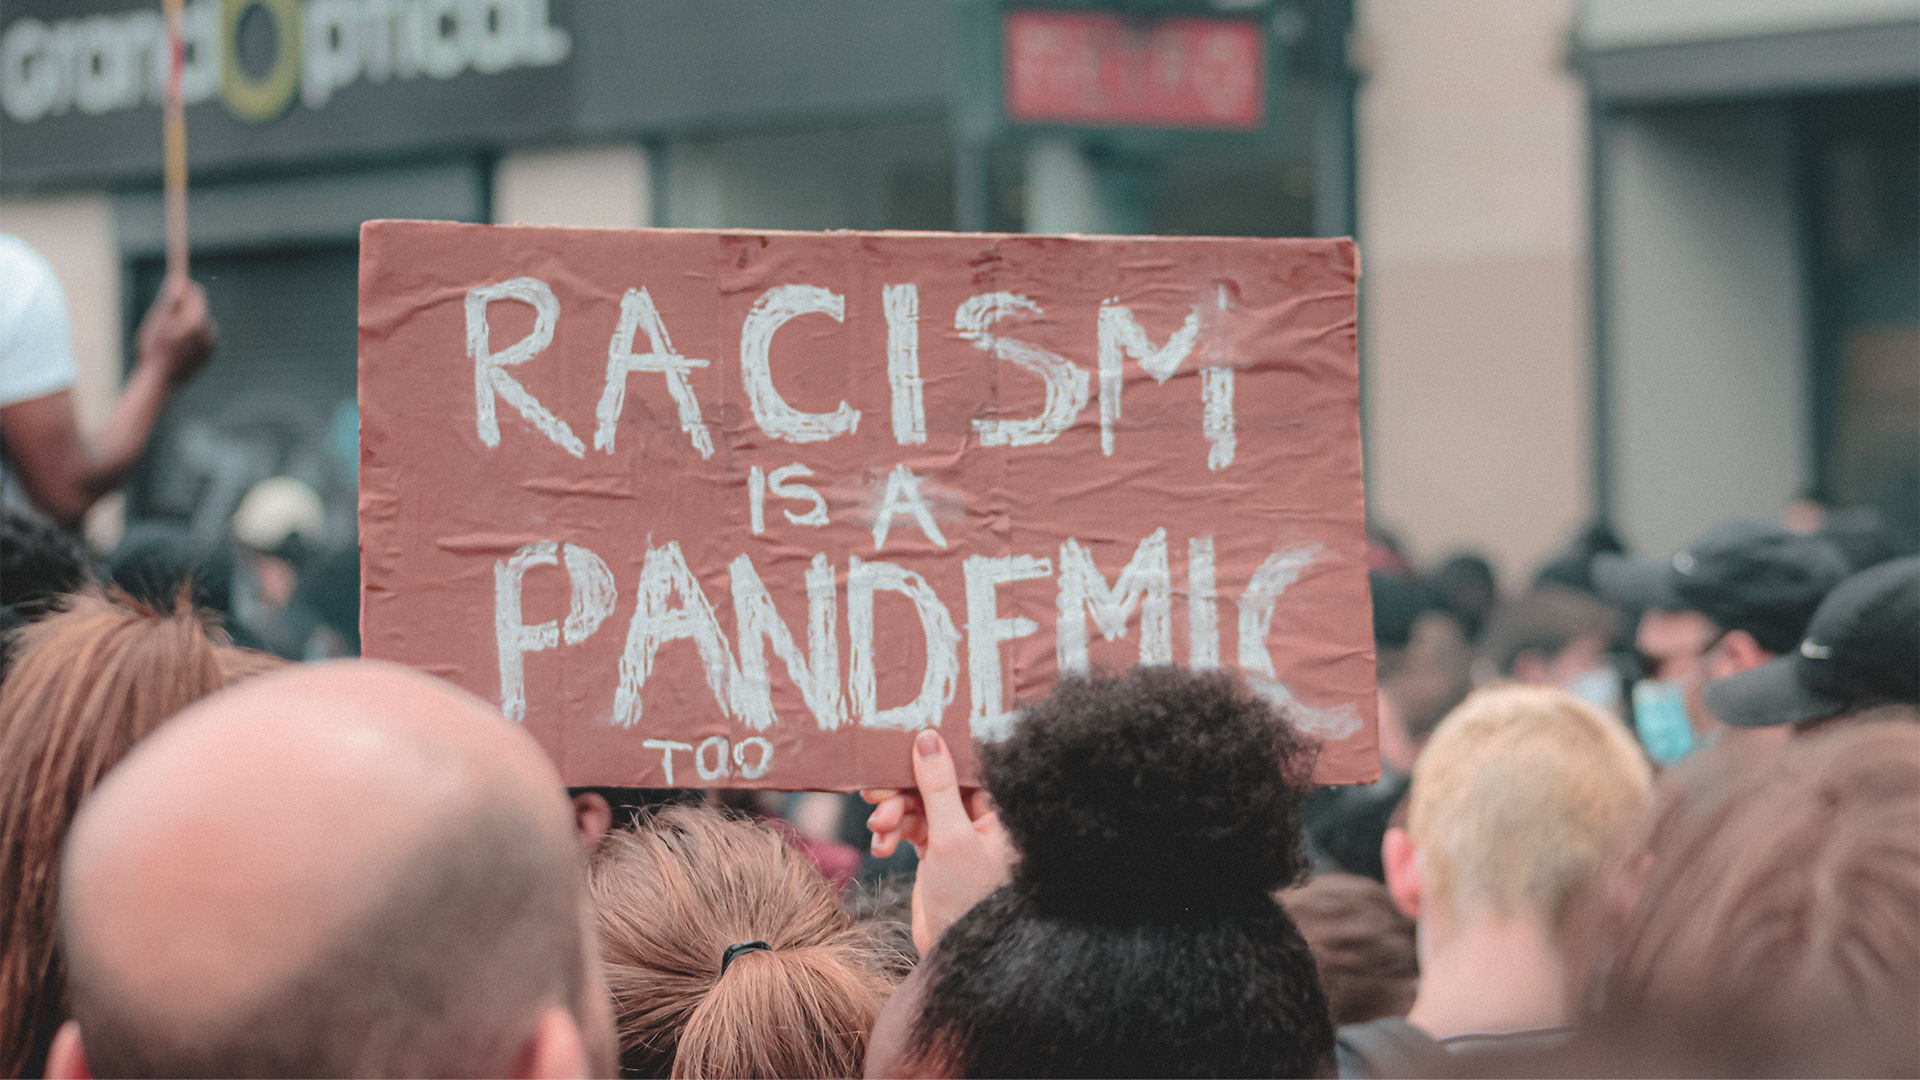 Schild bei einer Demonstration: "Racism is a Pandemic too"